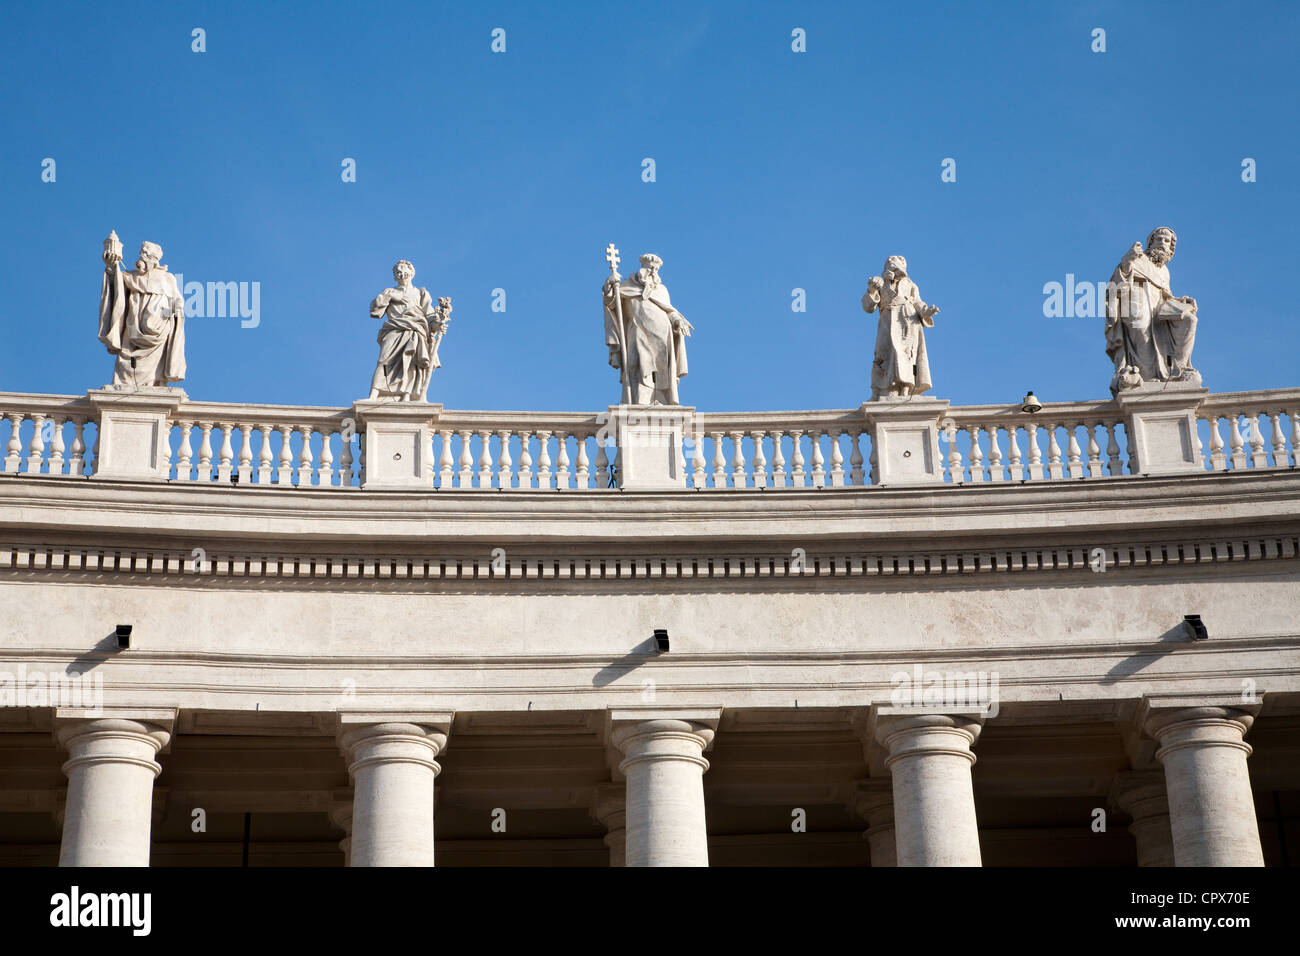 Rome - Bernini colonnade - detail Stock Photo